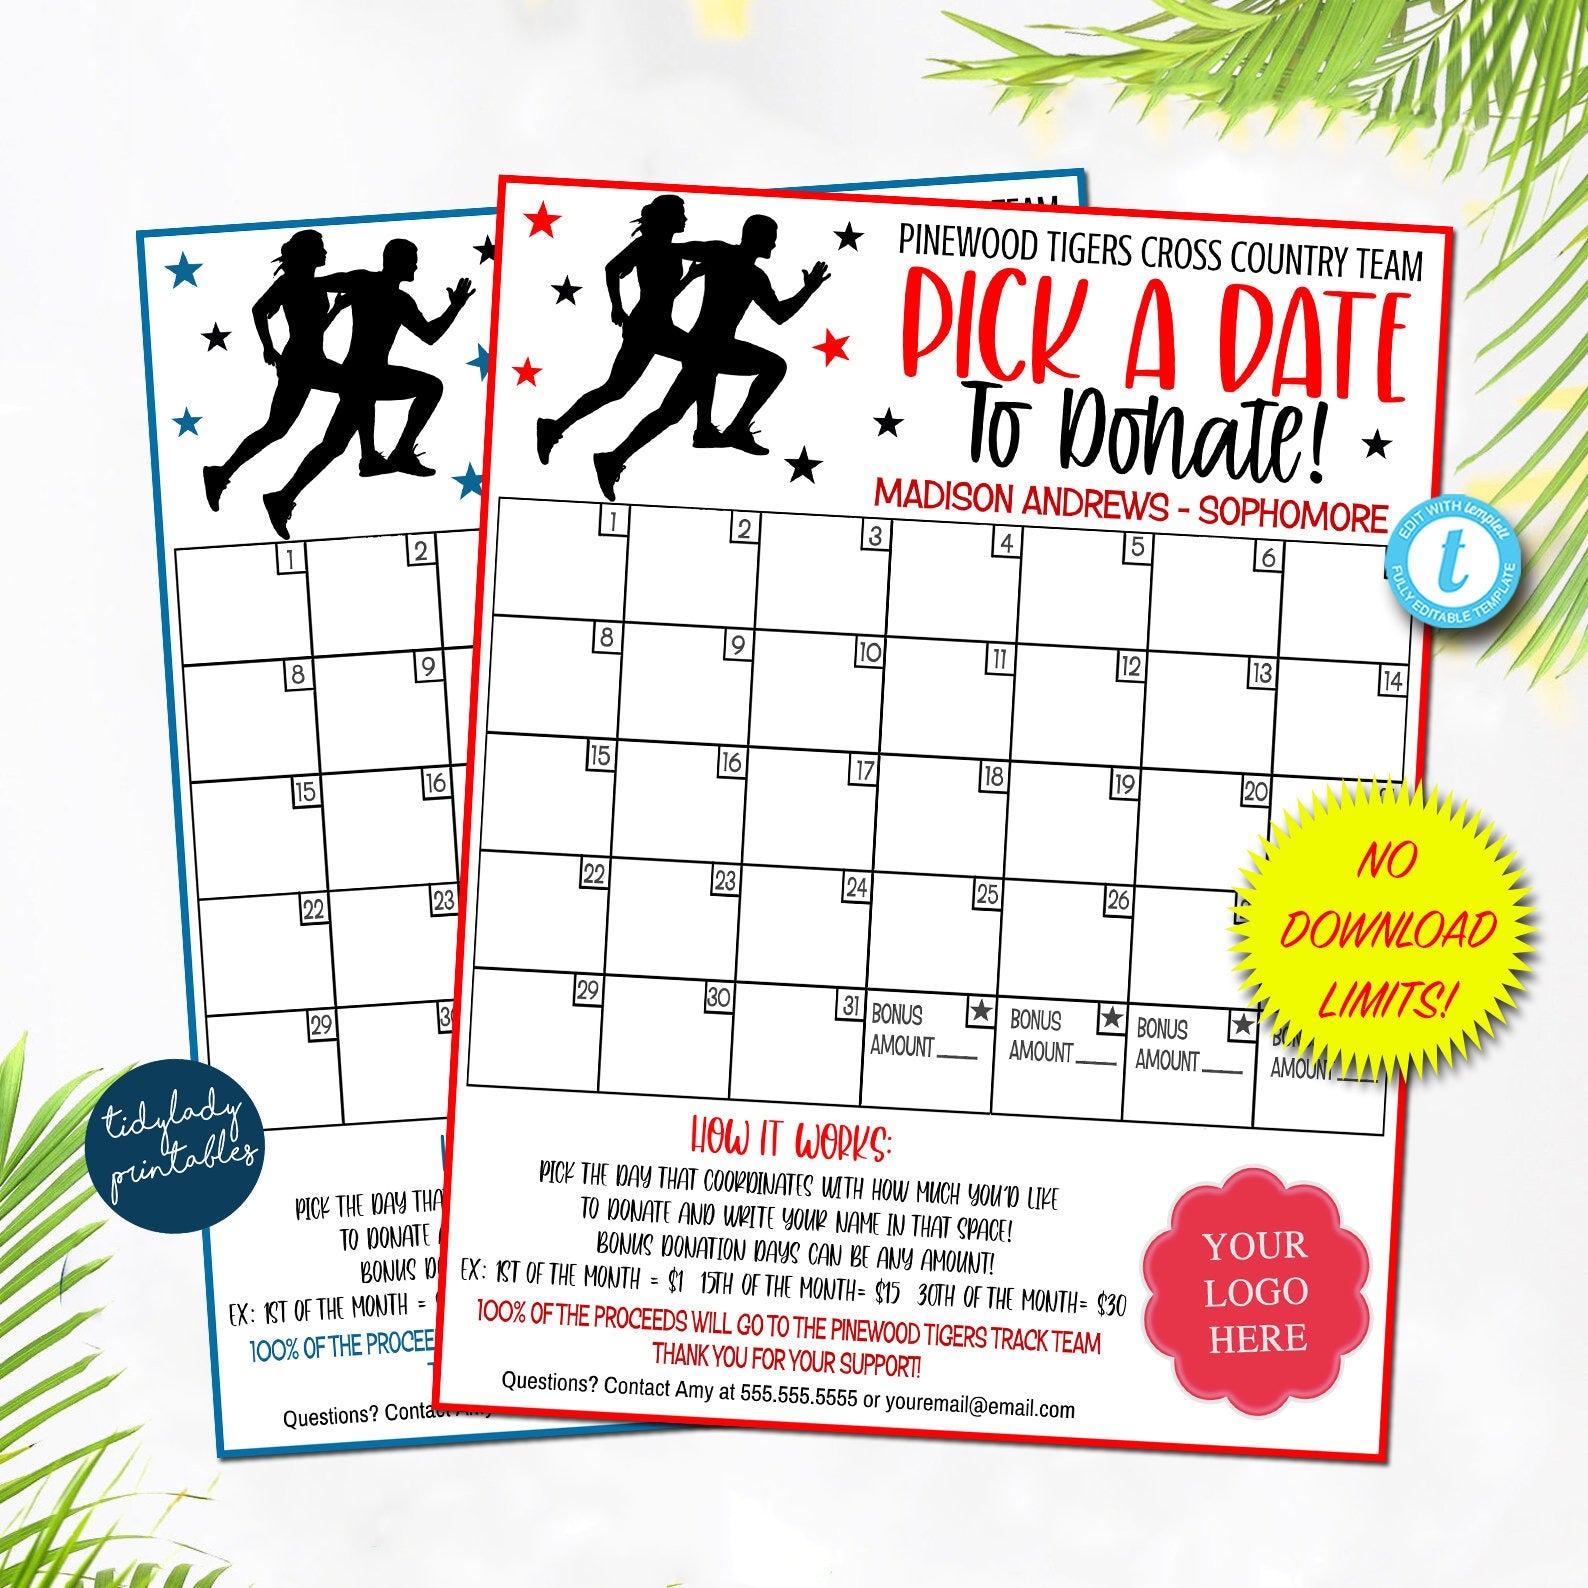 Editable Dancer Calendar Fundraiser Template Pick a Date to 